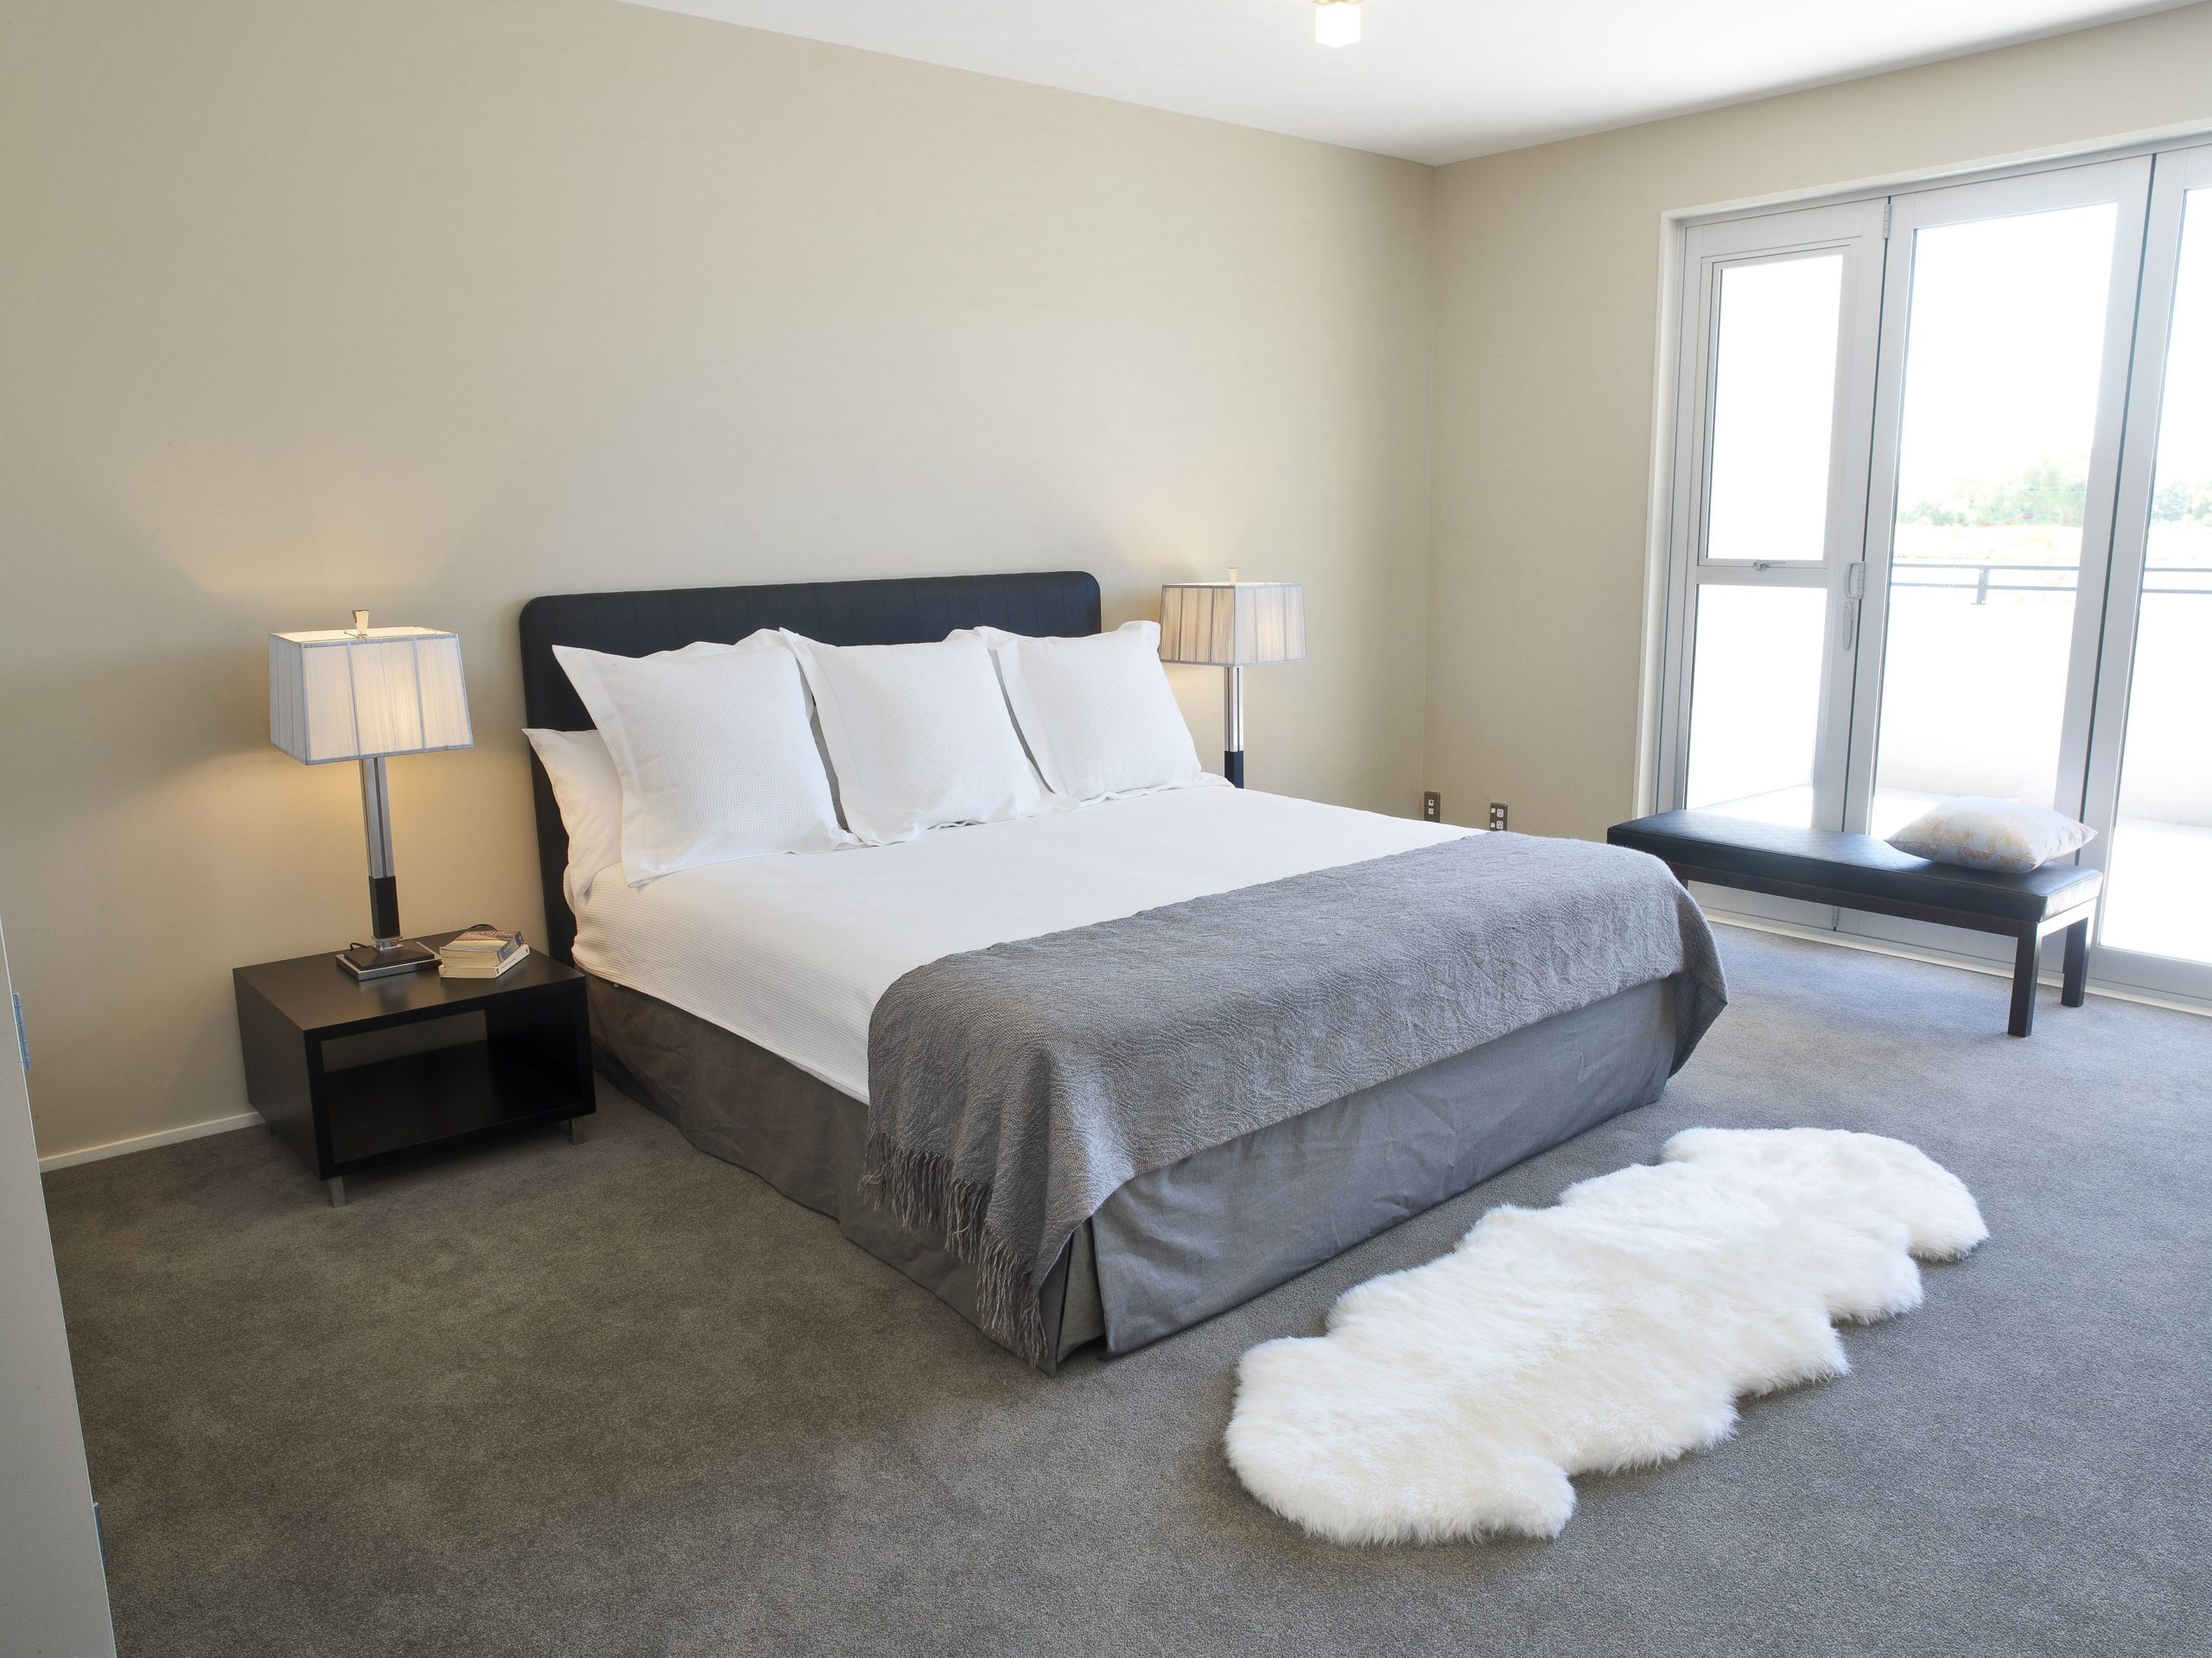 Bedroom carpet ideas eHomeDecor Explore more